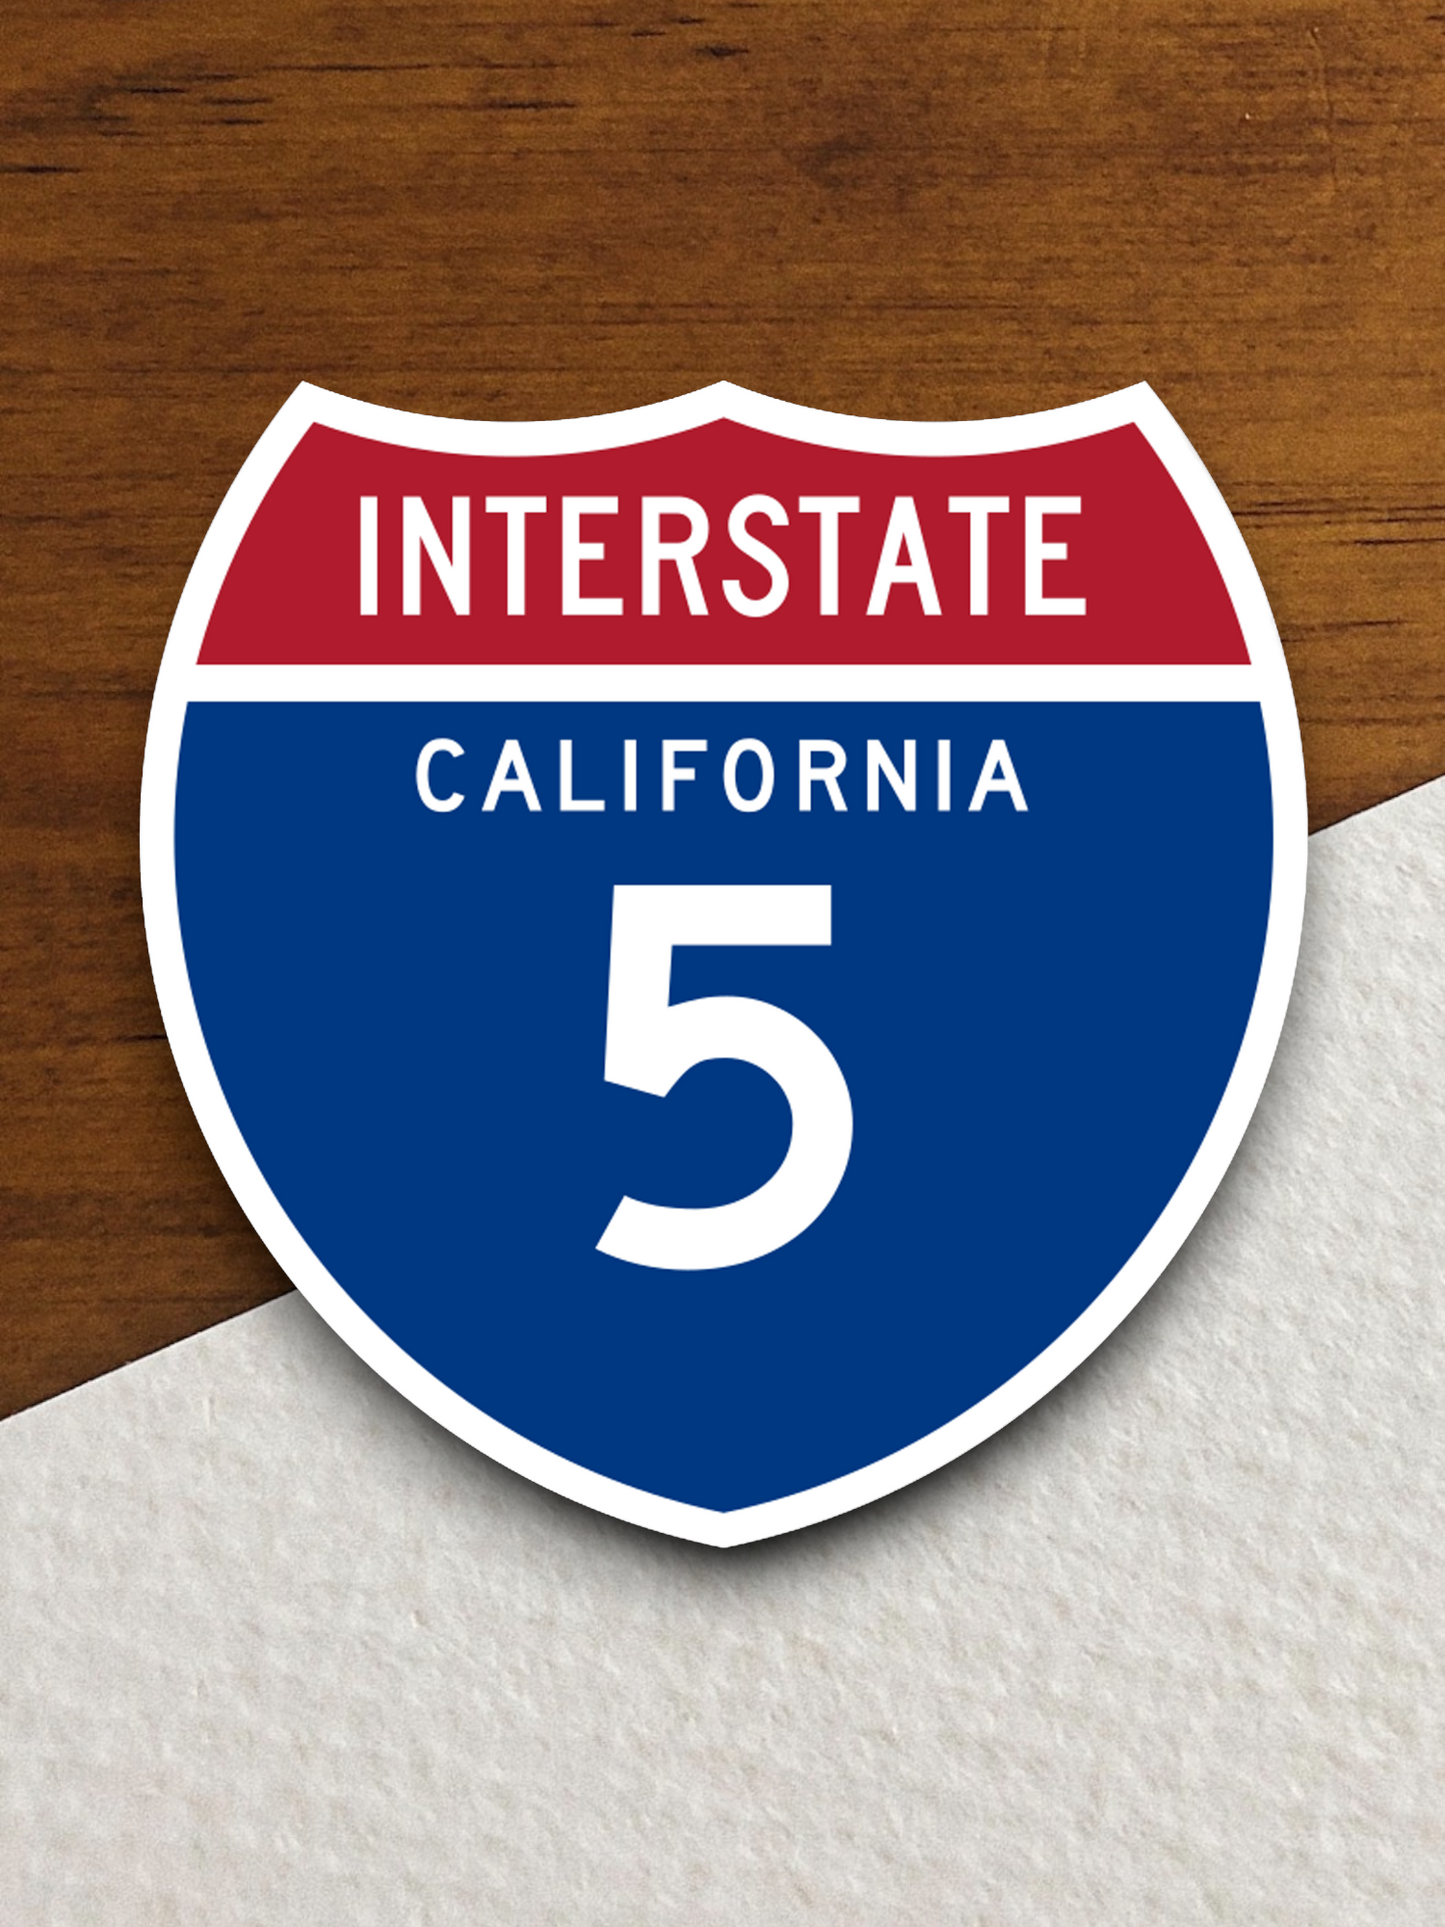 Interstate I-5 California - Road Sign Sticker